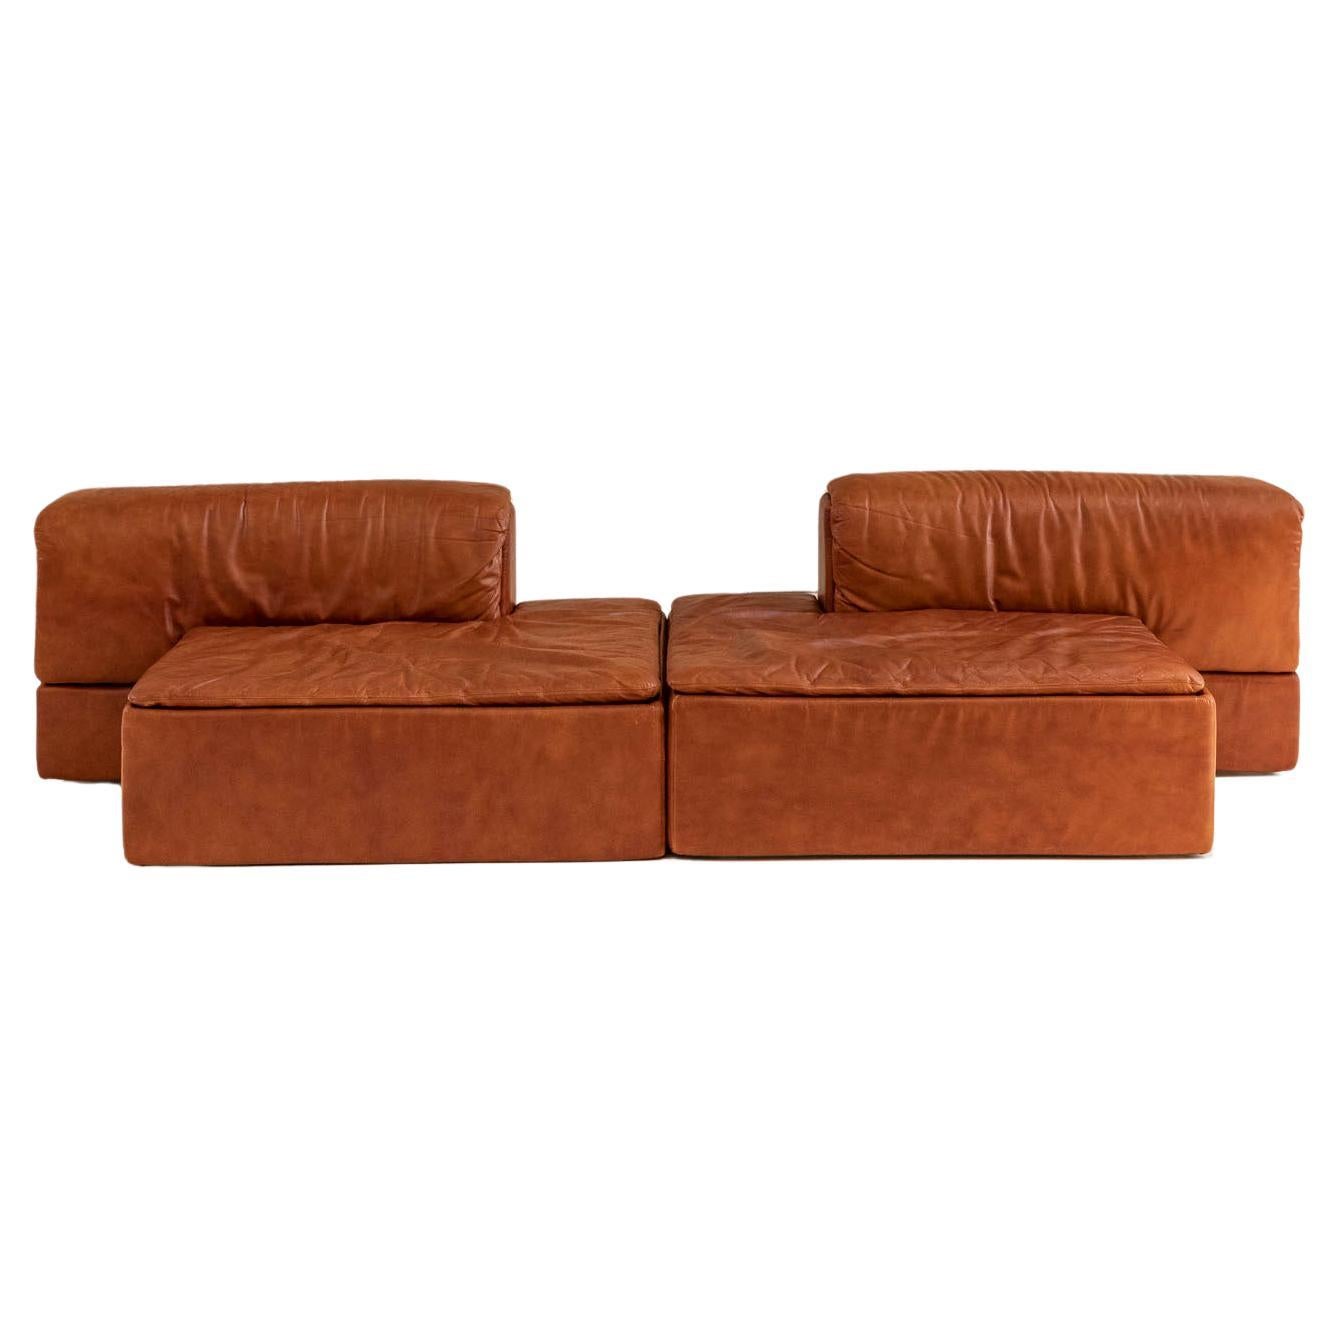 Modular Leather Sofas By Claudio, Modular Leather Furniture